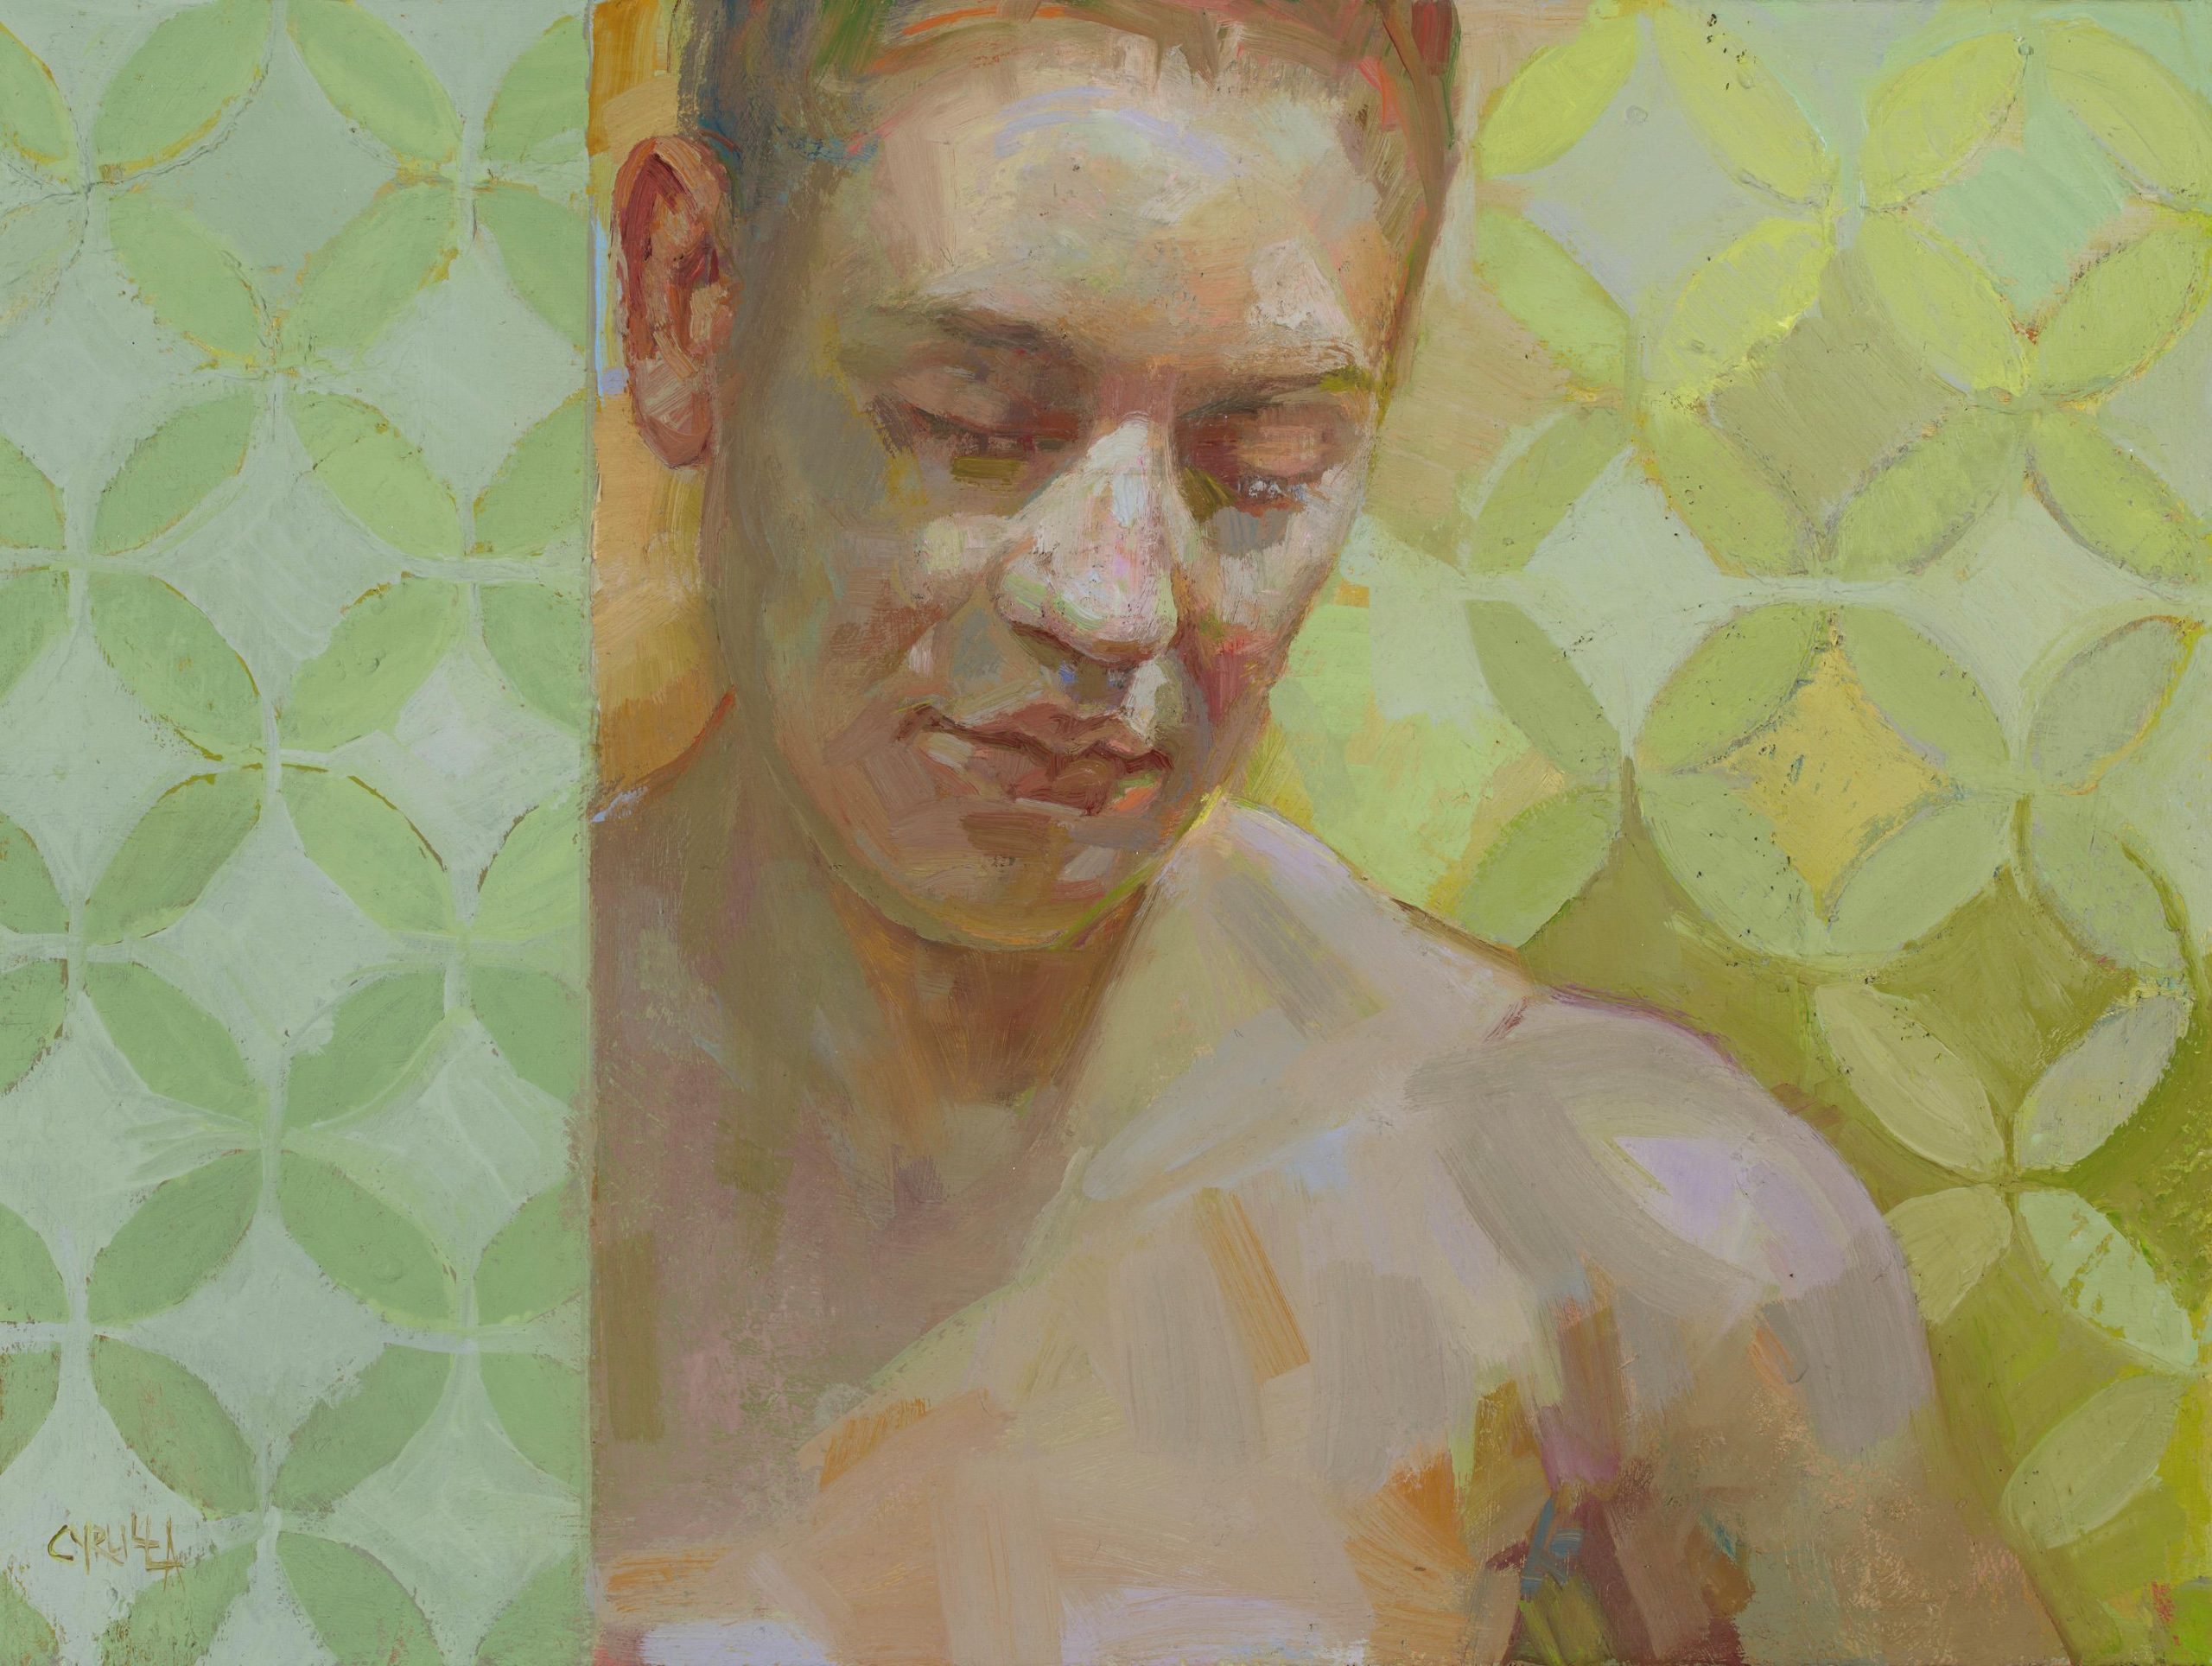 Dagmar Cyrulla 'Reflection' oil on canvas 40 x 30cm SOLD